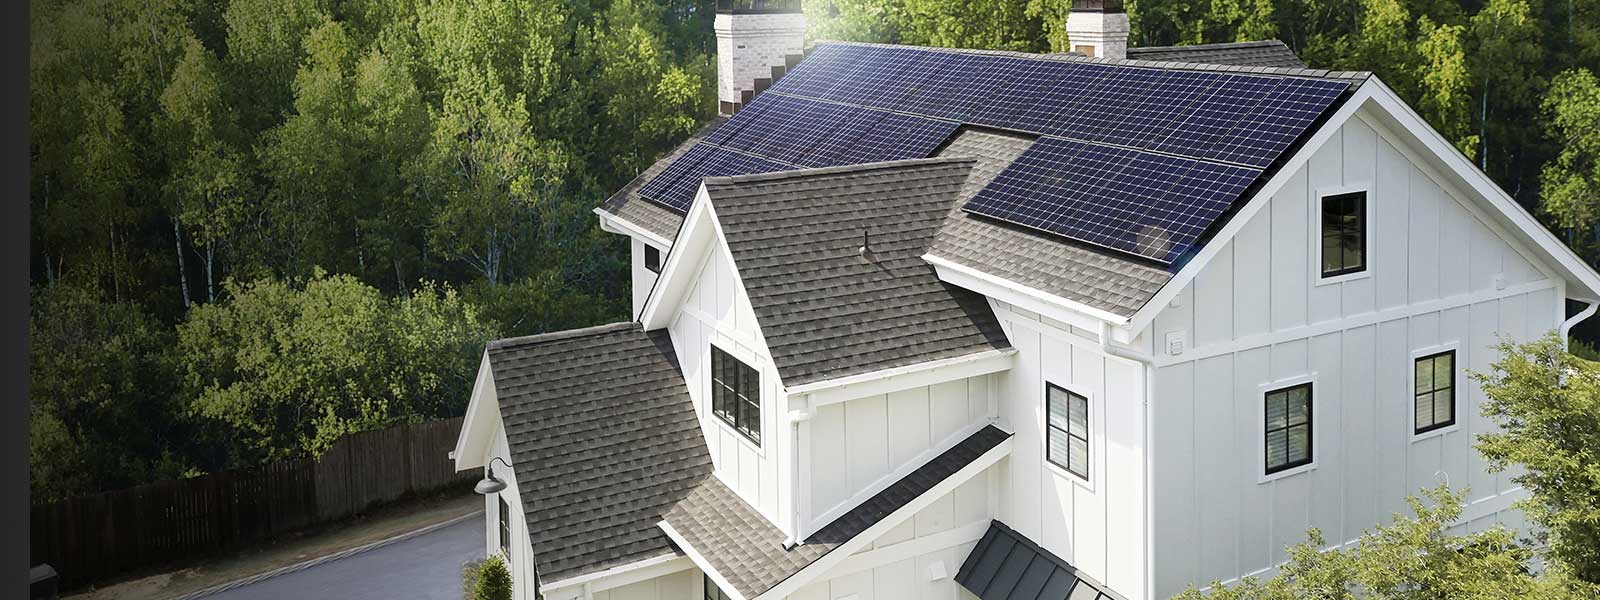 The roof of the premium villa has a LG solar panel.